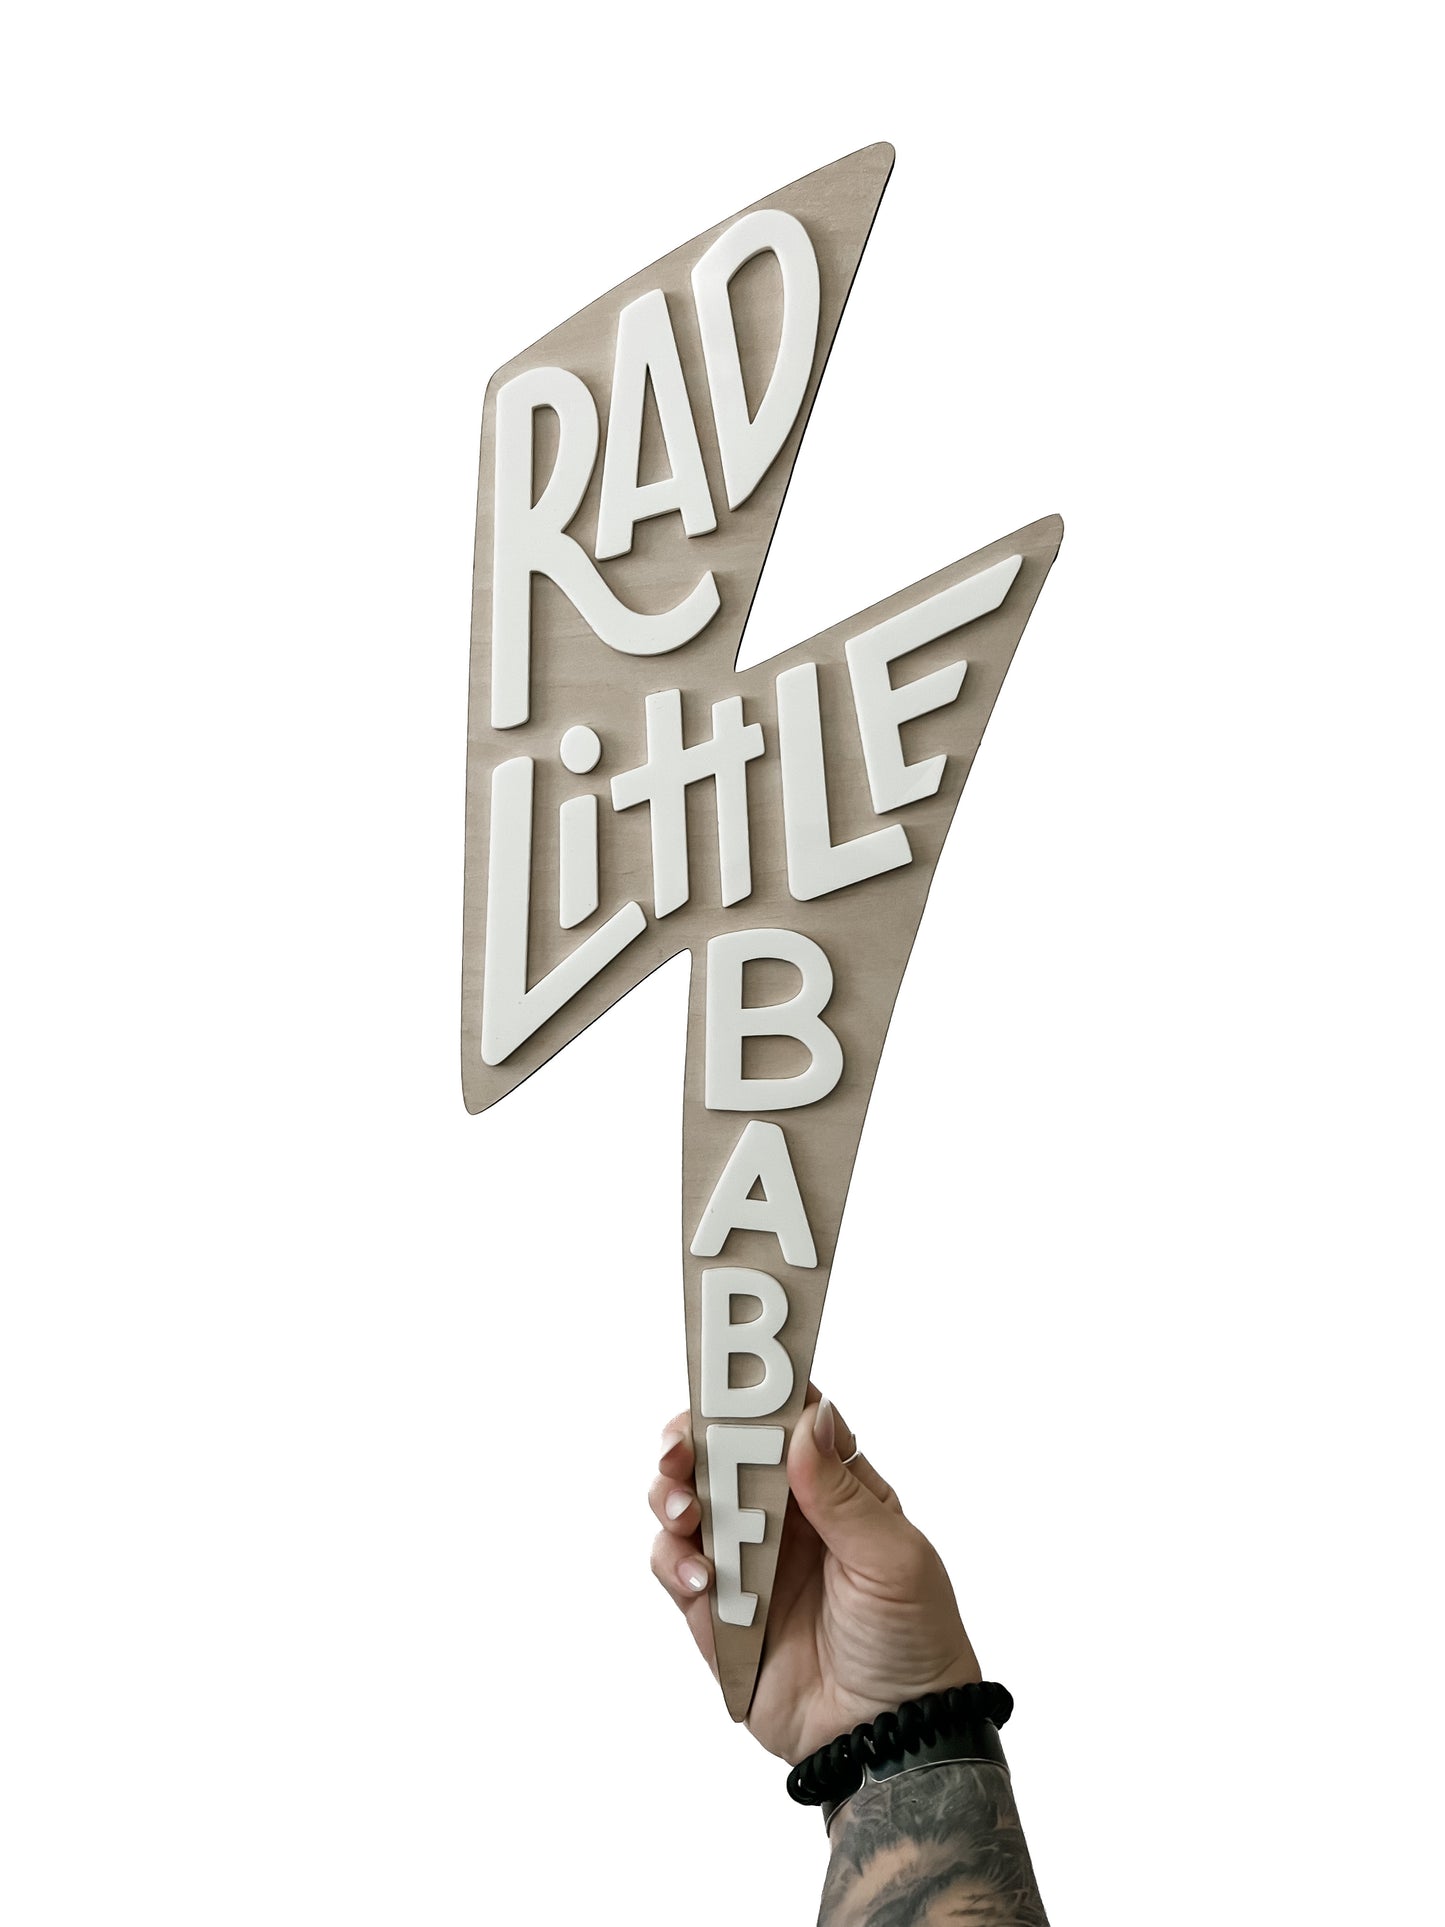 RAD LITTLE BABE - WOODEN SIGN